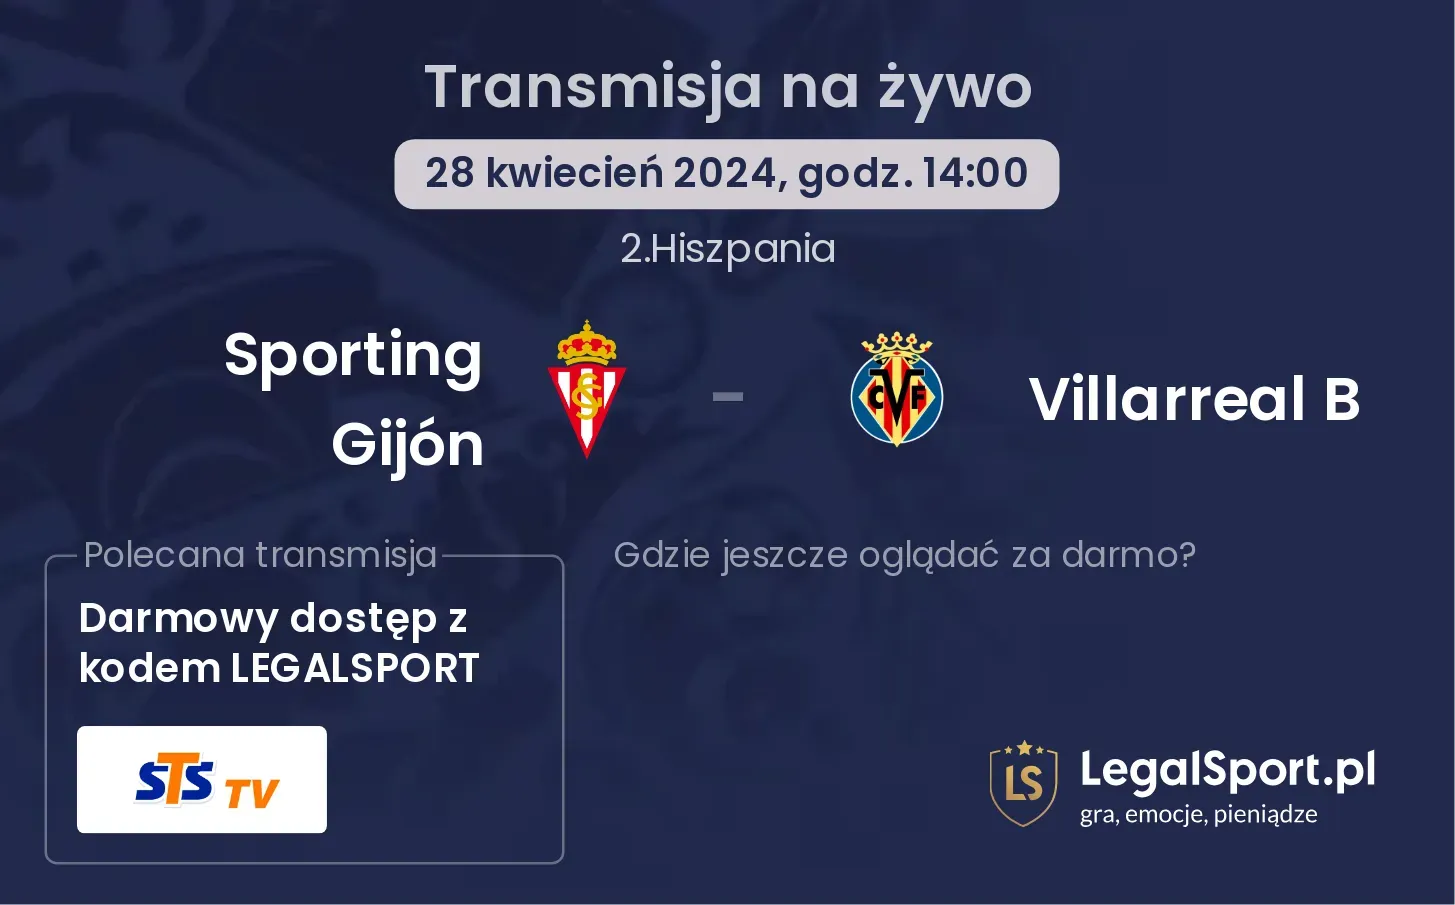 Sporting Gijón - Villarreal B transmisja na żywo